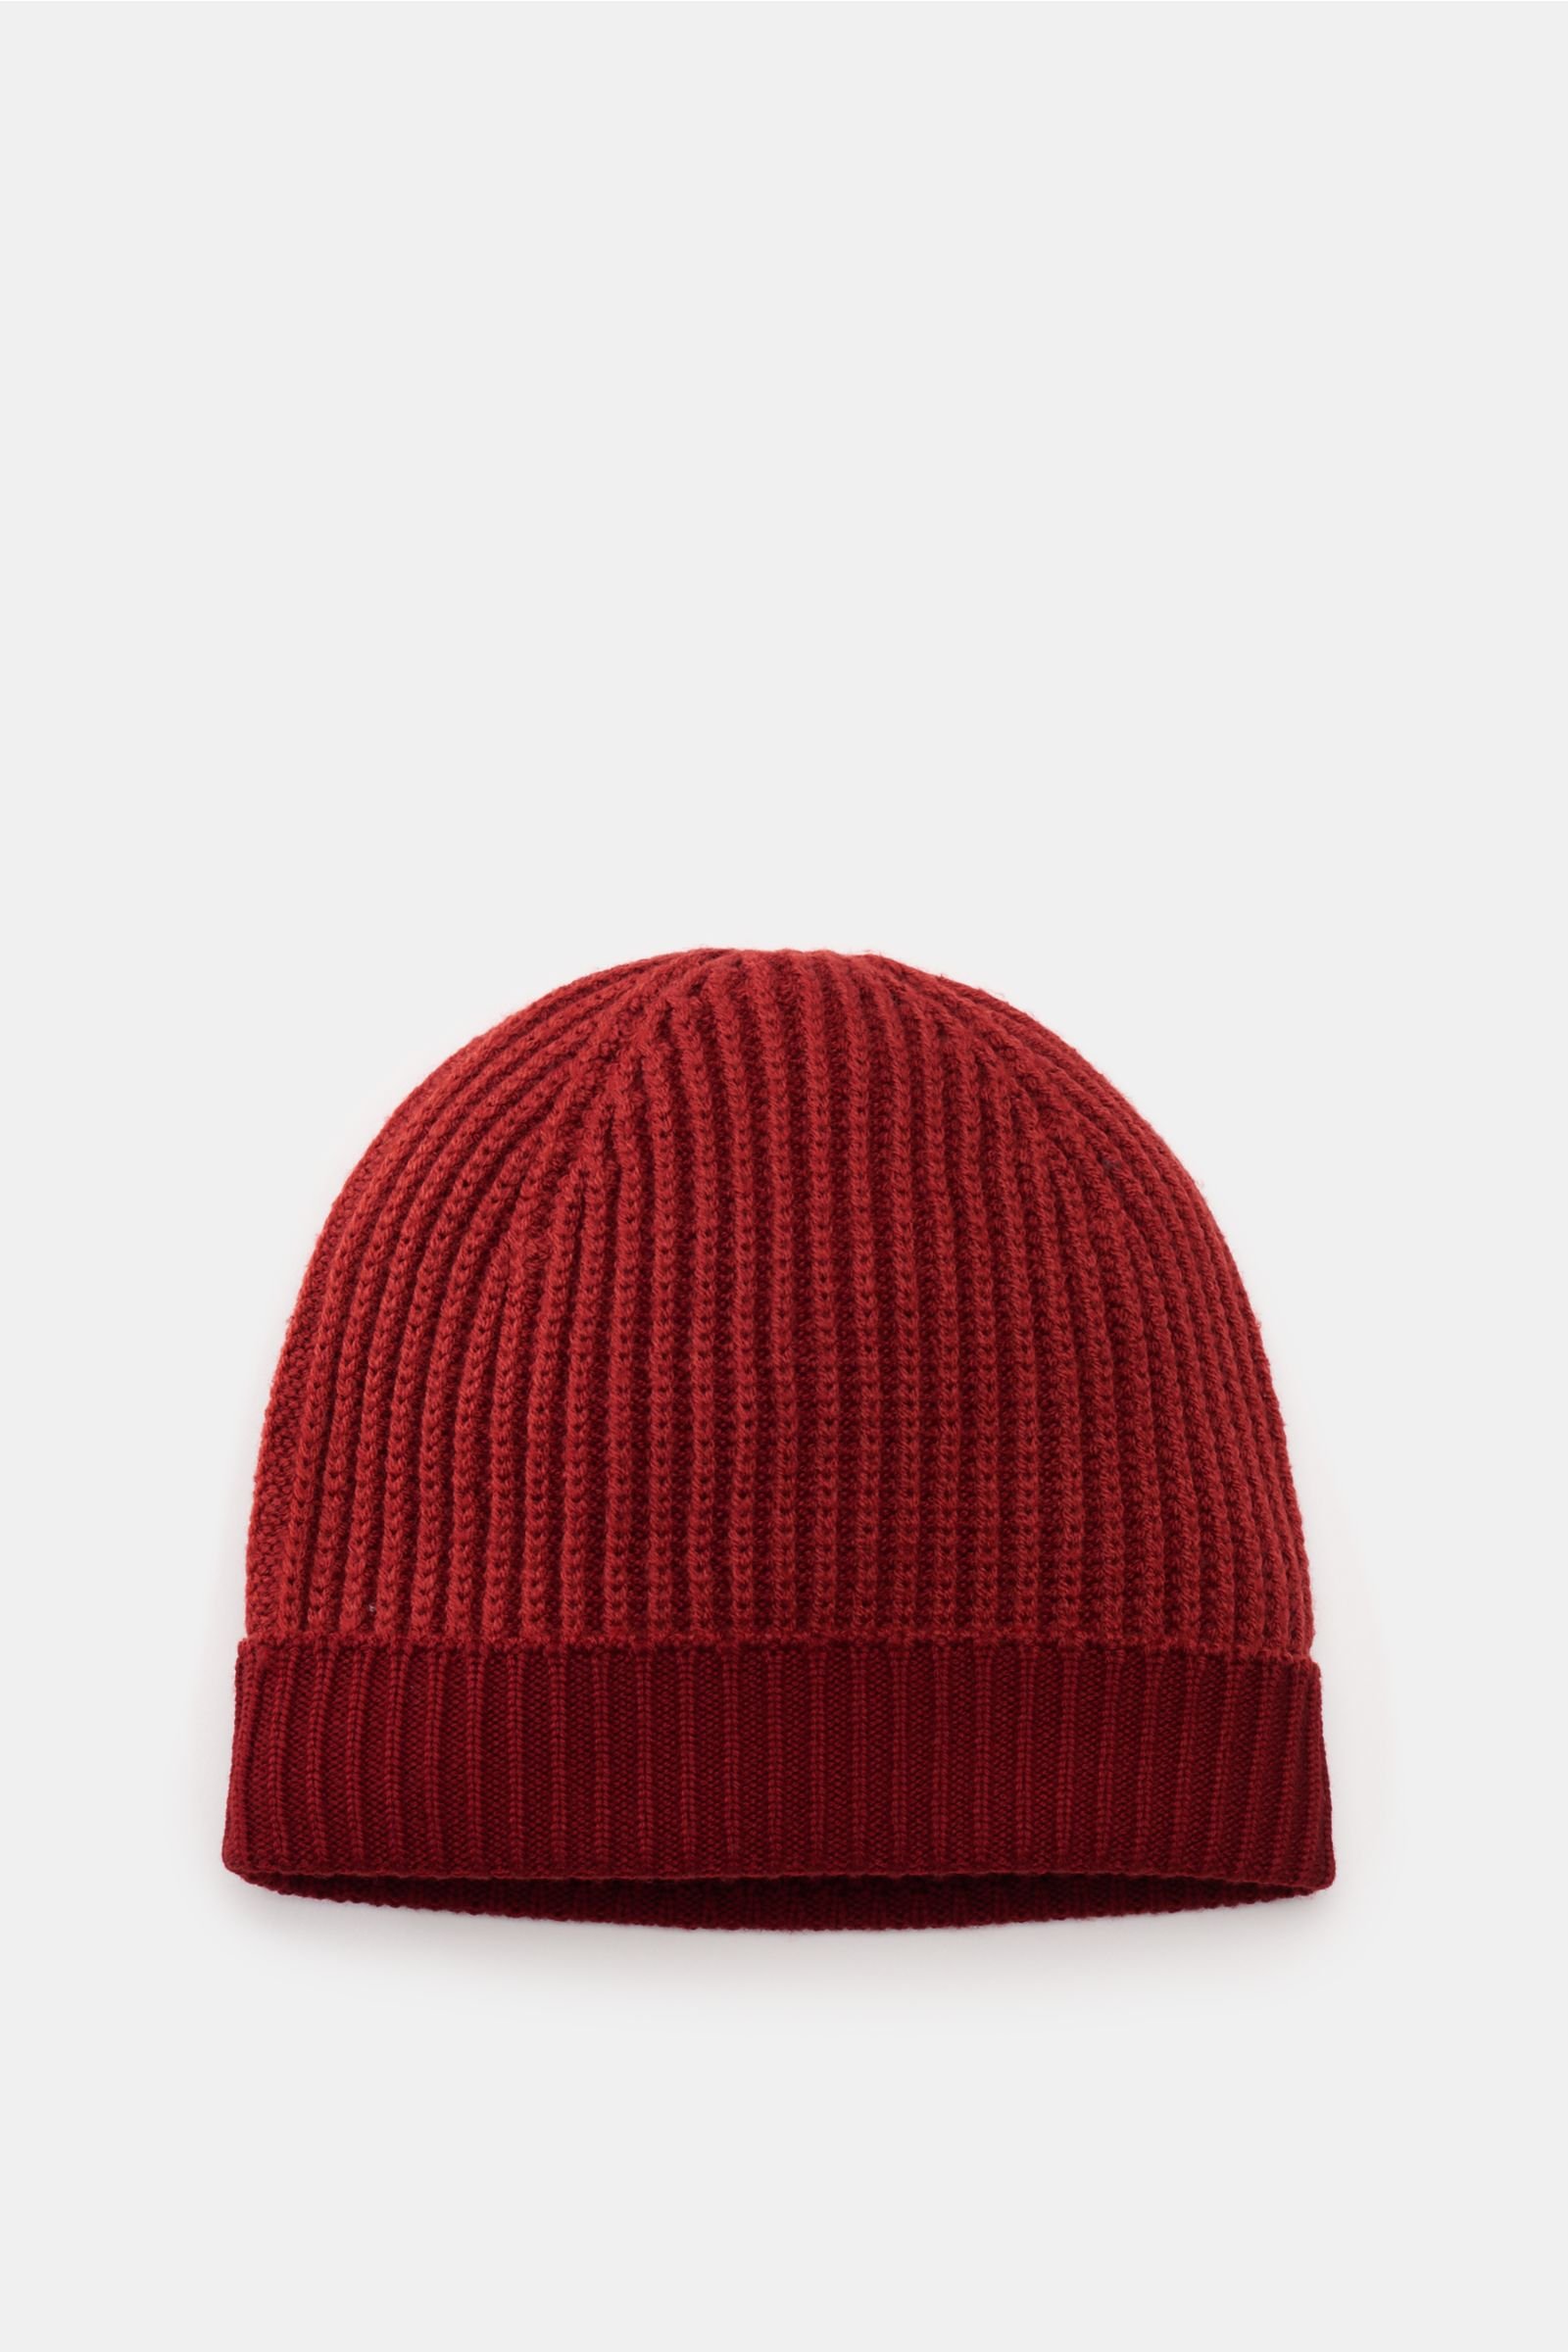 Wool beanie 'Foggy Rip Hat' red